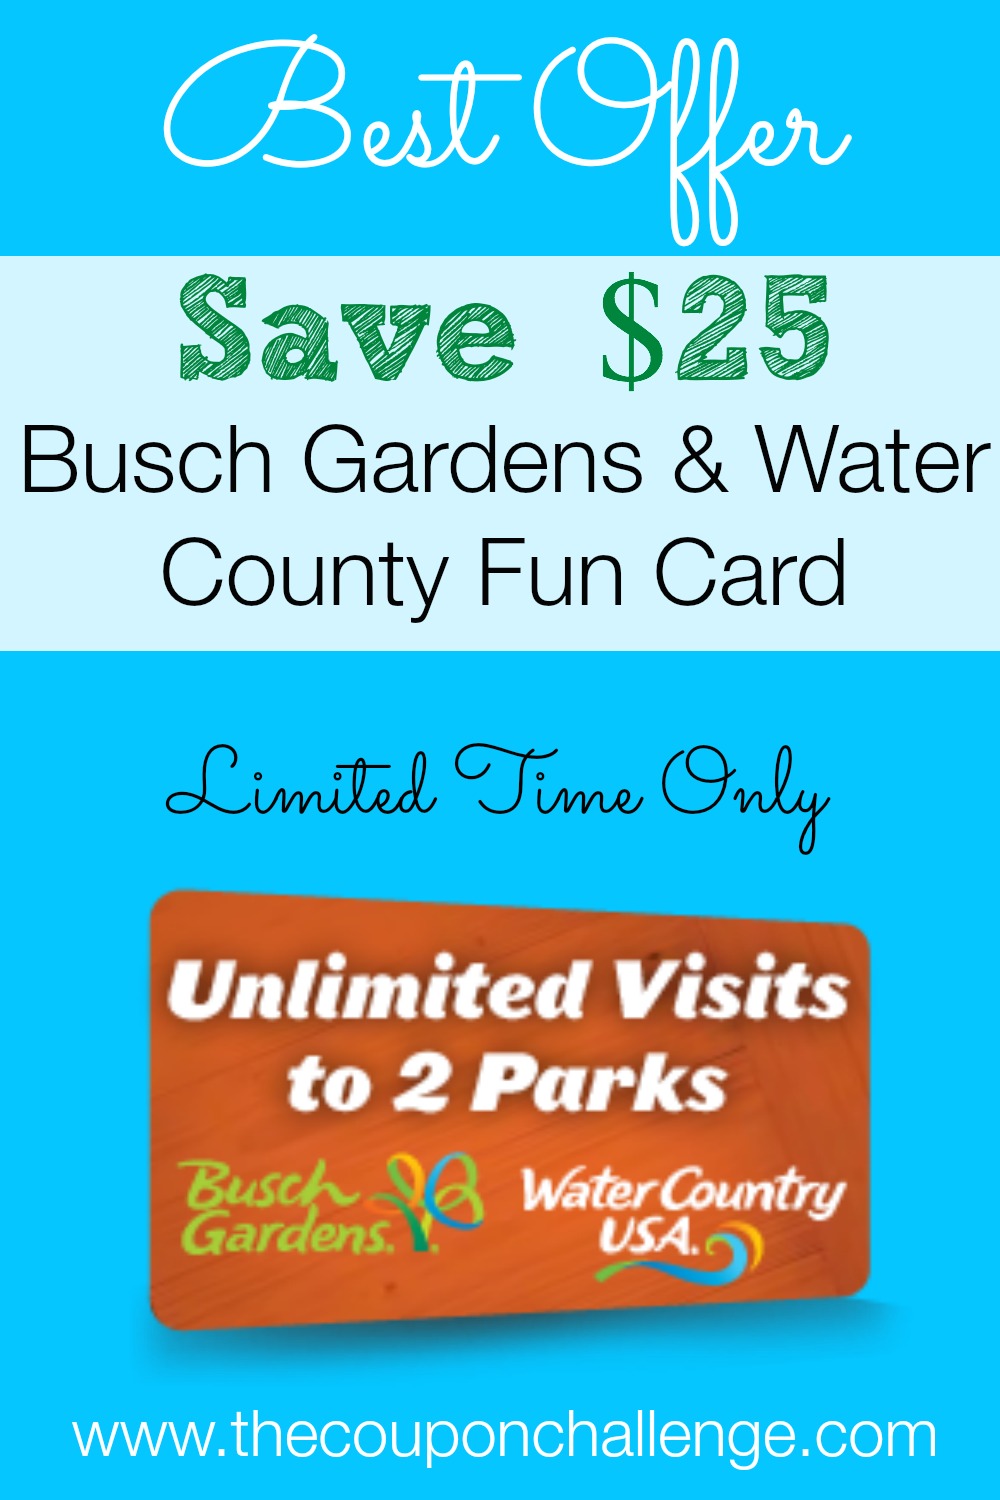 Busch Gardens Williamsburg Fun Card